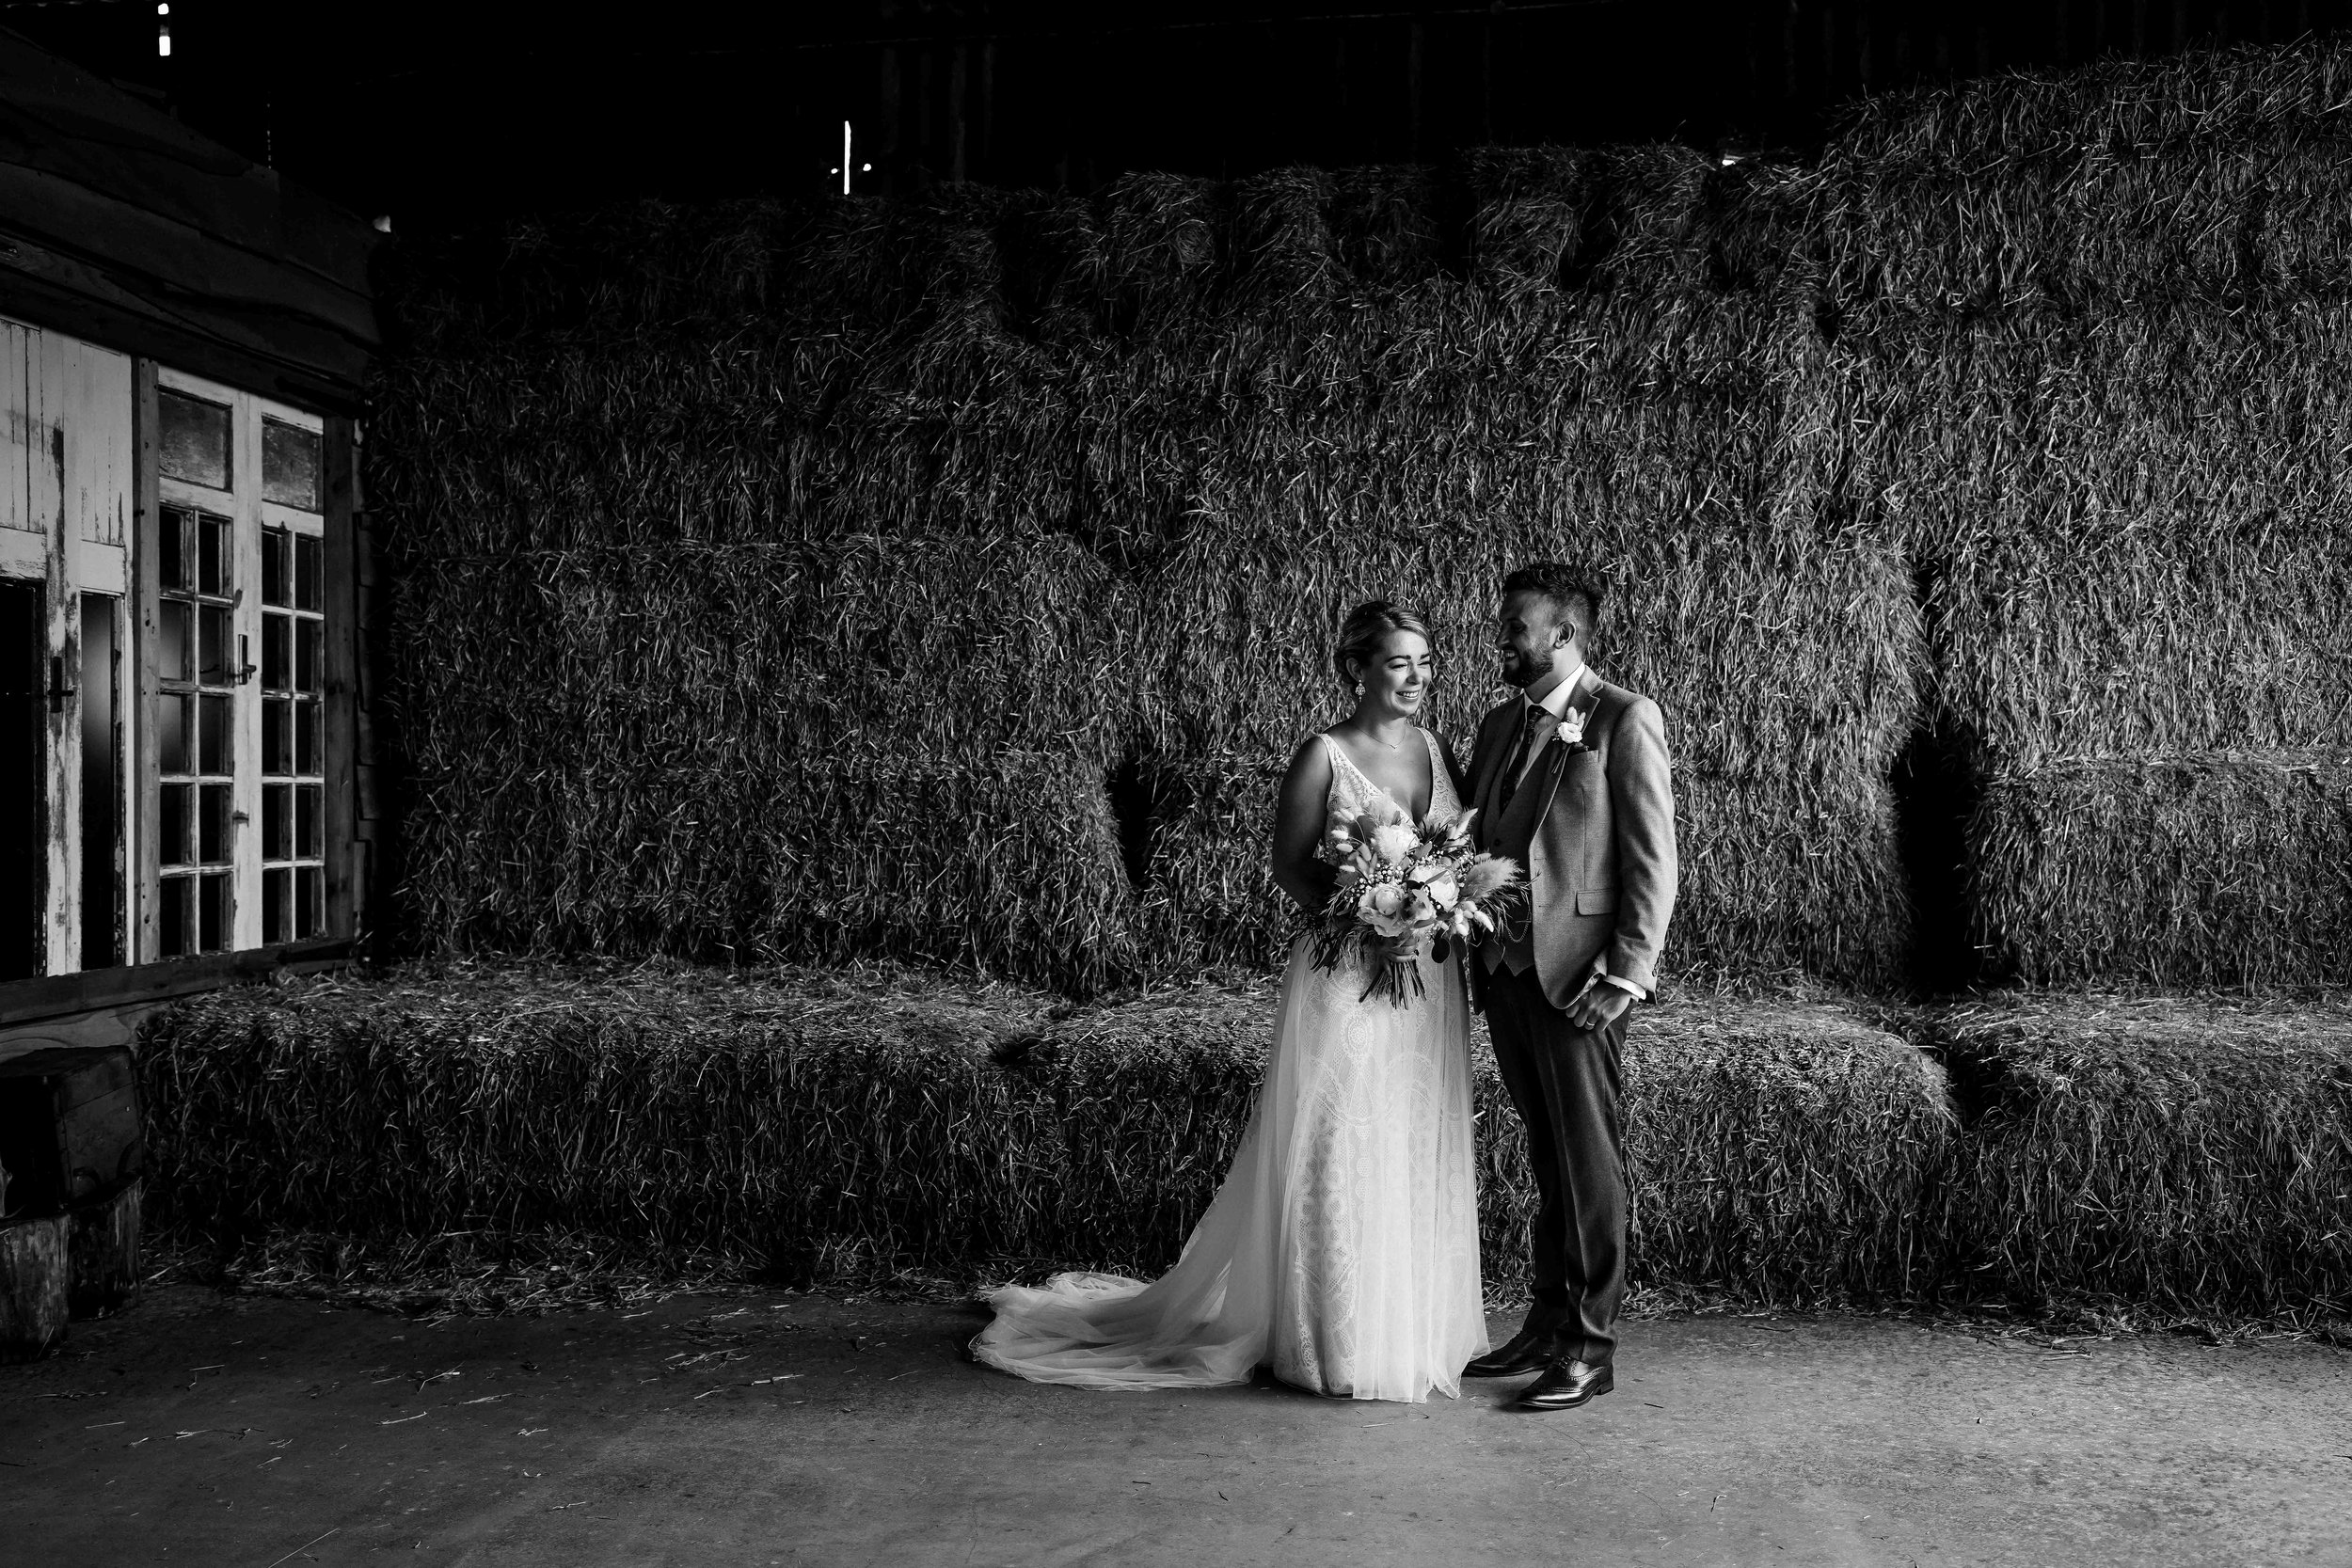 Owen House Wedding Photographer based in cheshire - 032.jpg